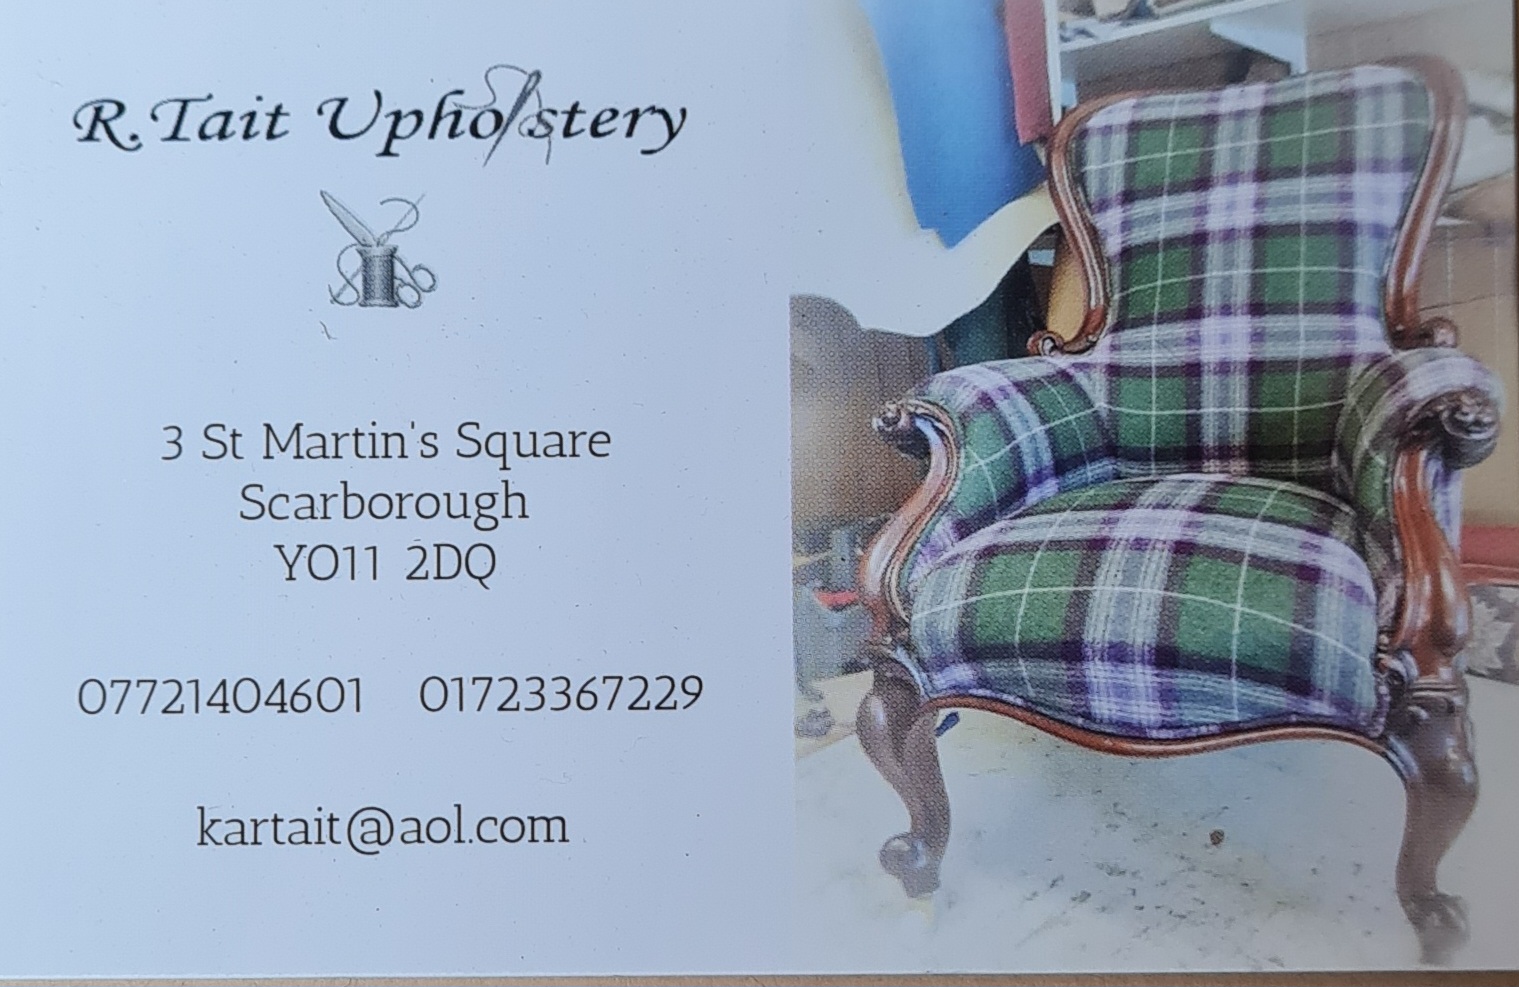 R,Tait upholstery Ltd